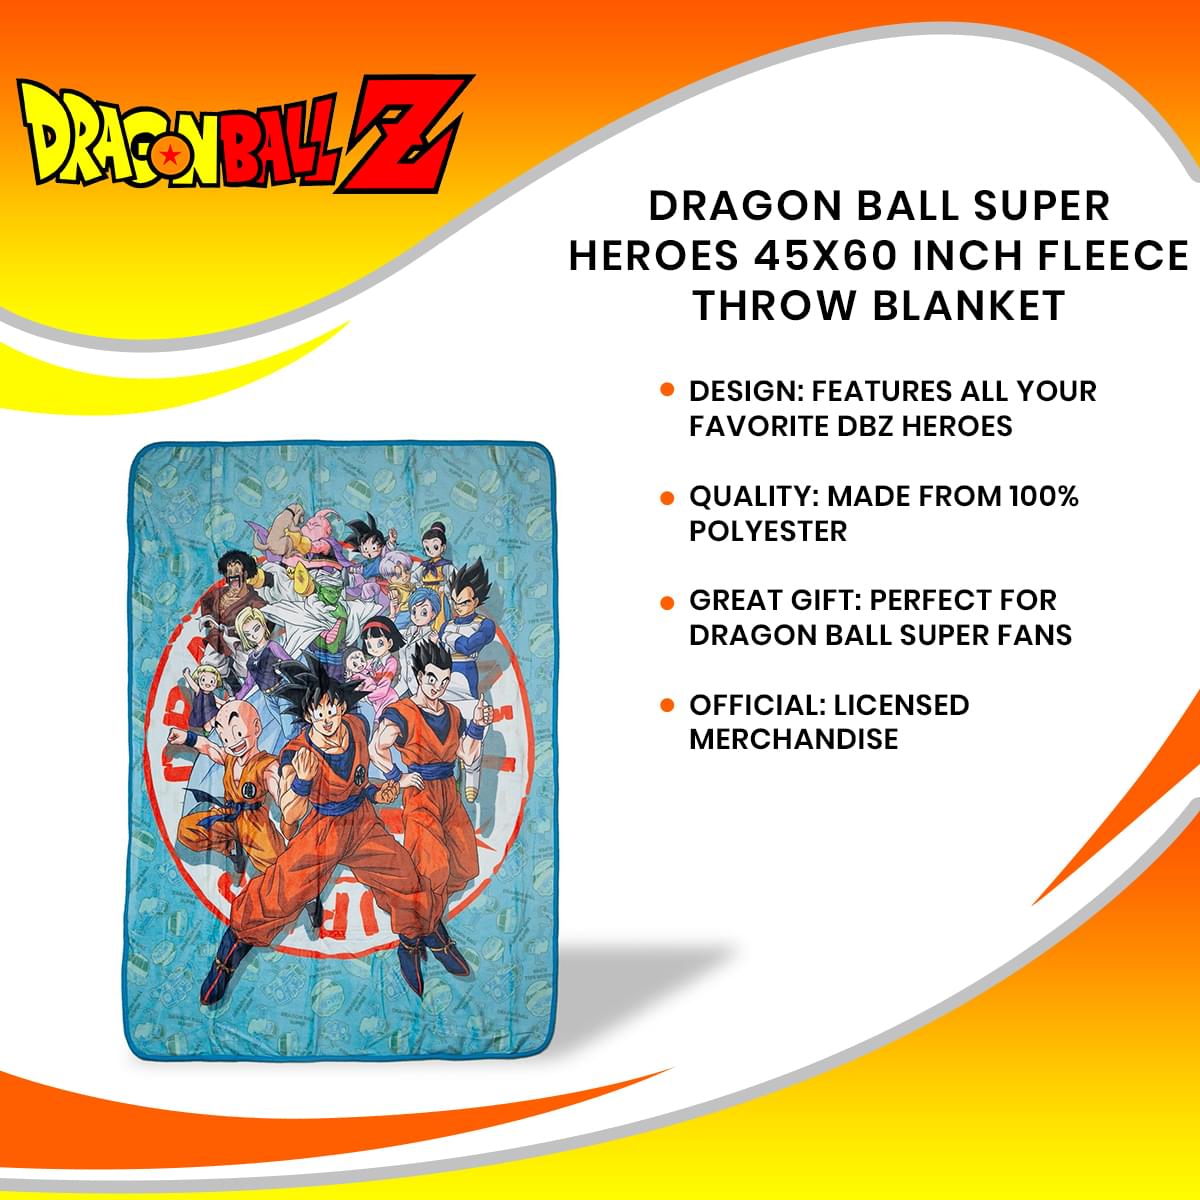 Dragon Ball Super Heroes 45x60 Inch Fleece Throw Blanket